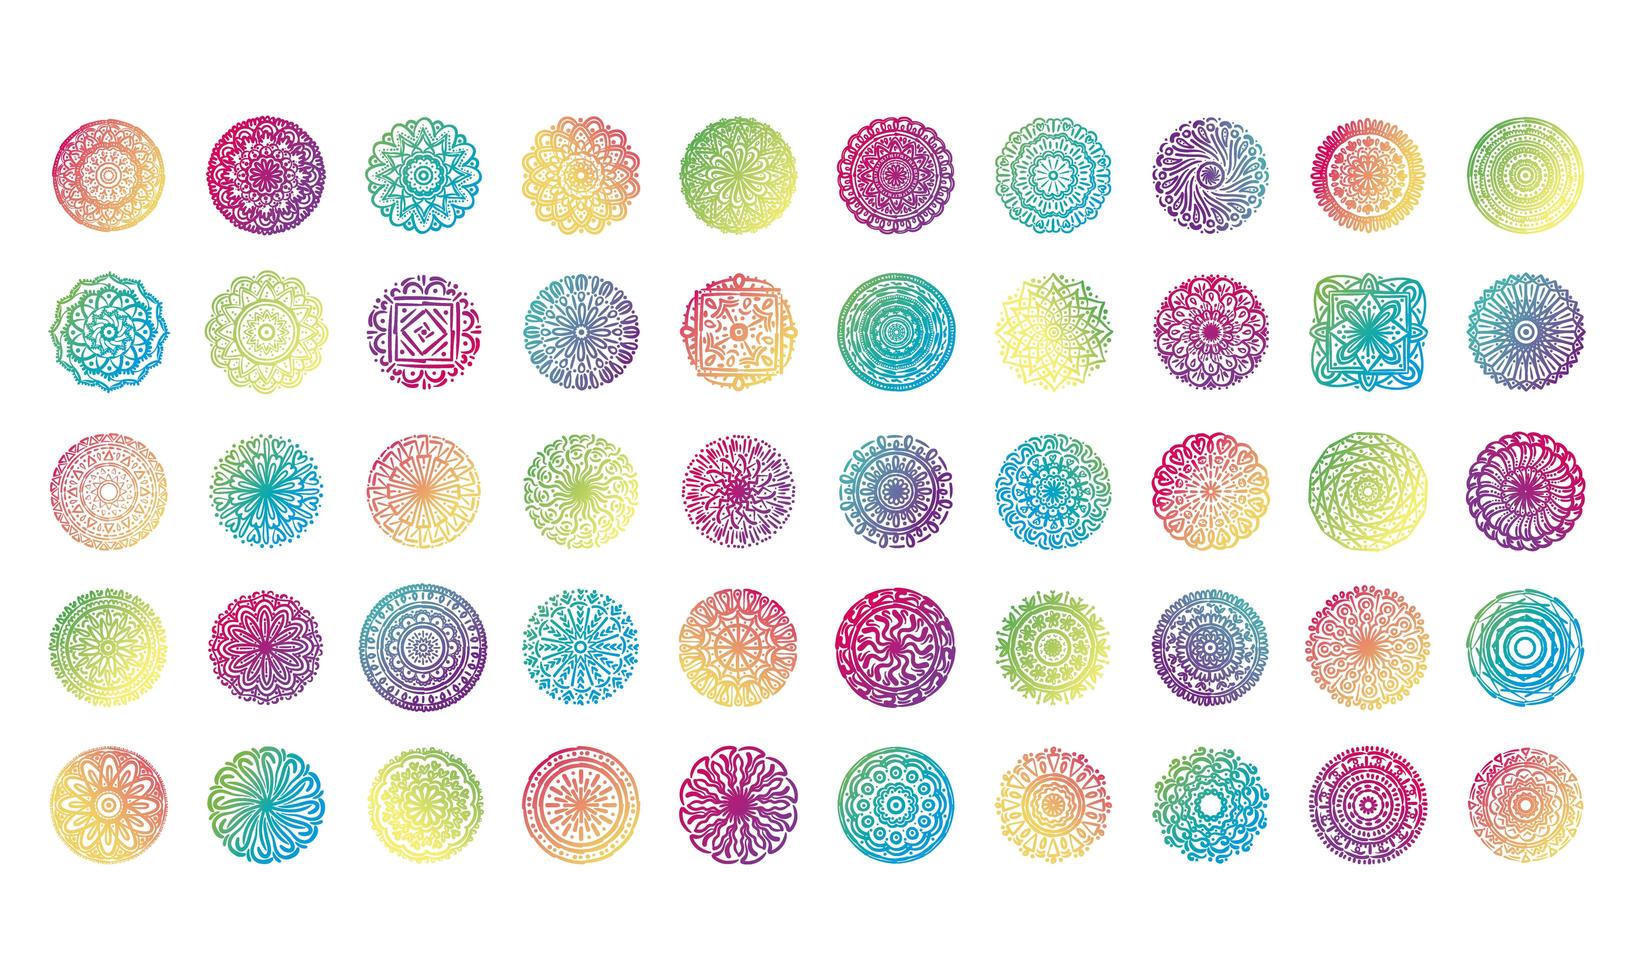 Bündel von fünfzig farbenfrohen Mandalas Set Icons vektor